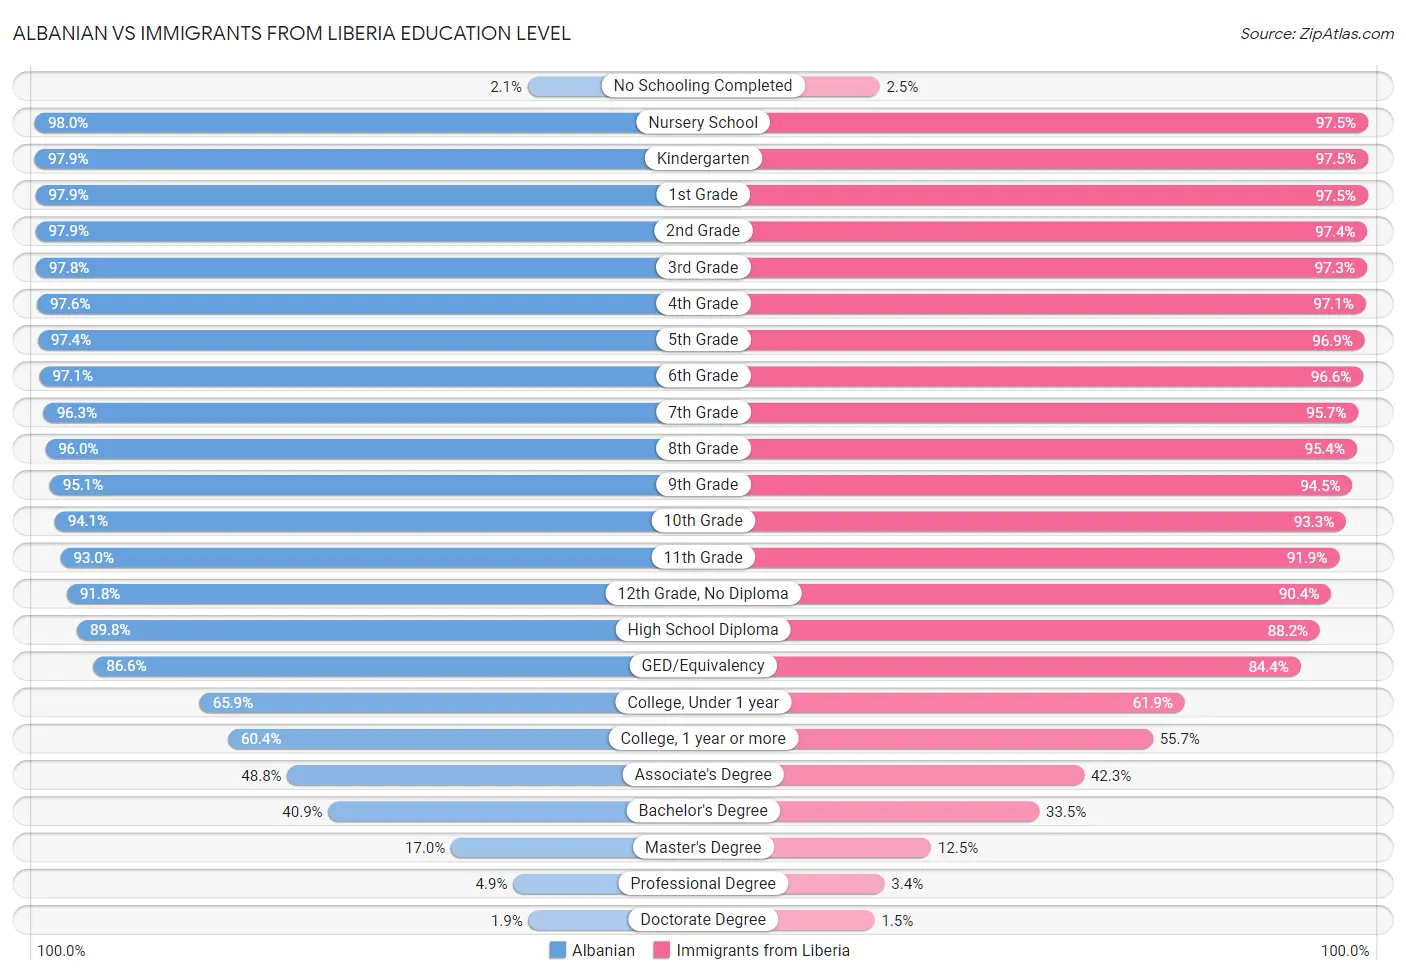 Albanian vs Immigrants from Liberia Education Level